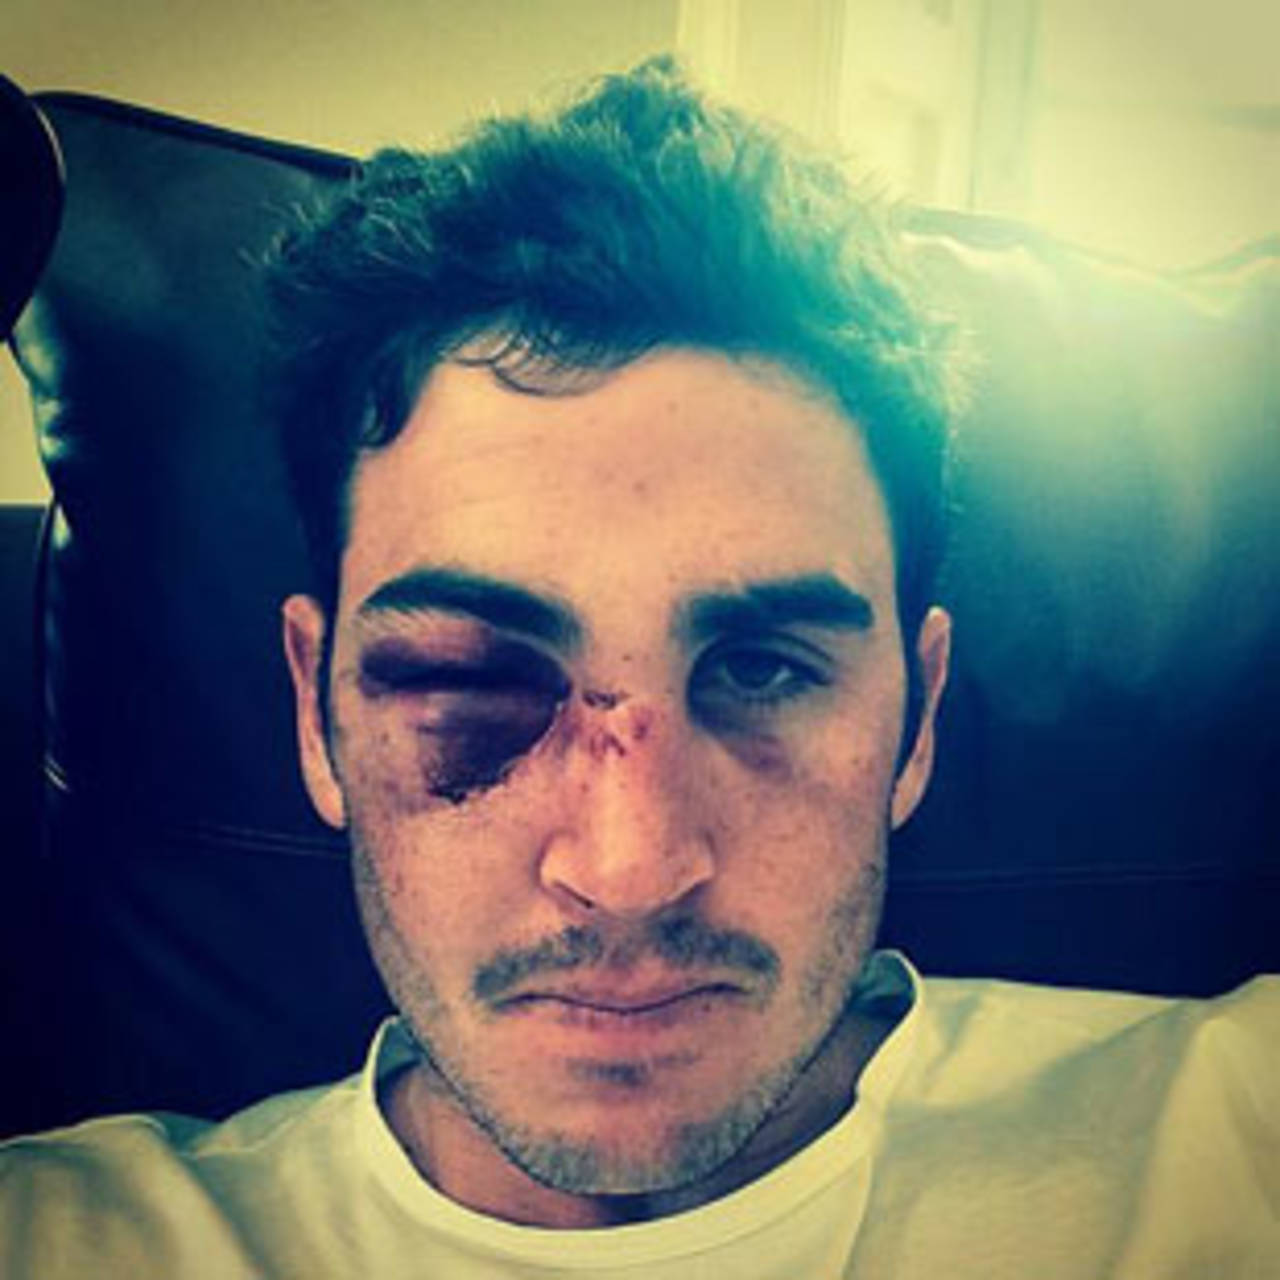 Craig Kieswetter shows his battle scars, July 13, 2014